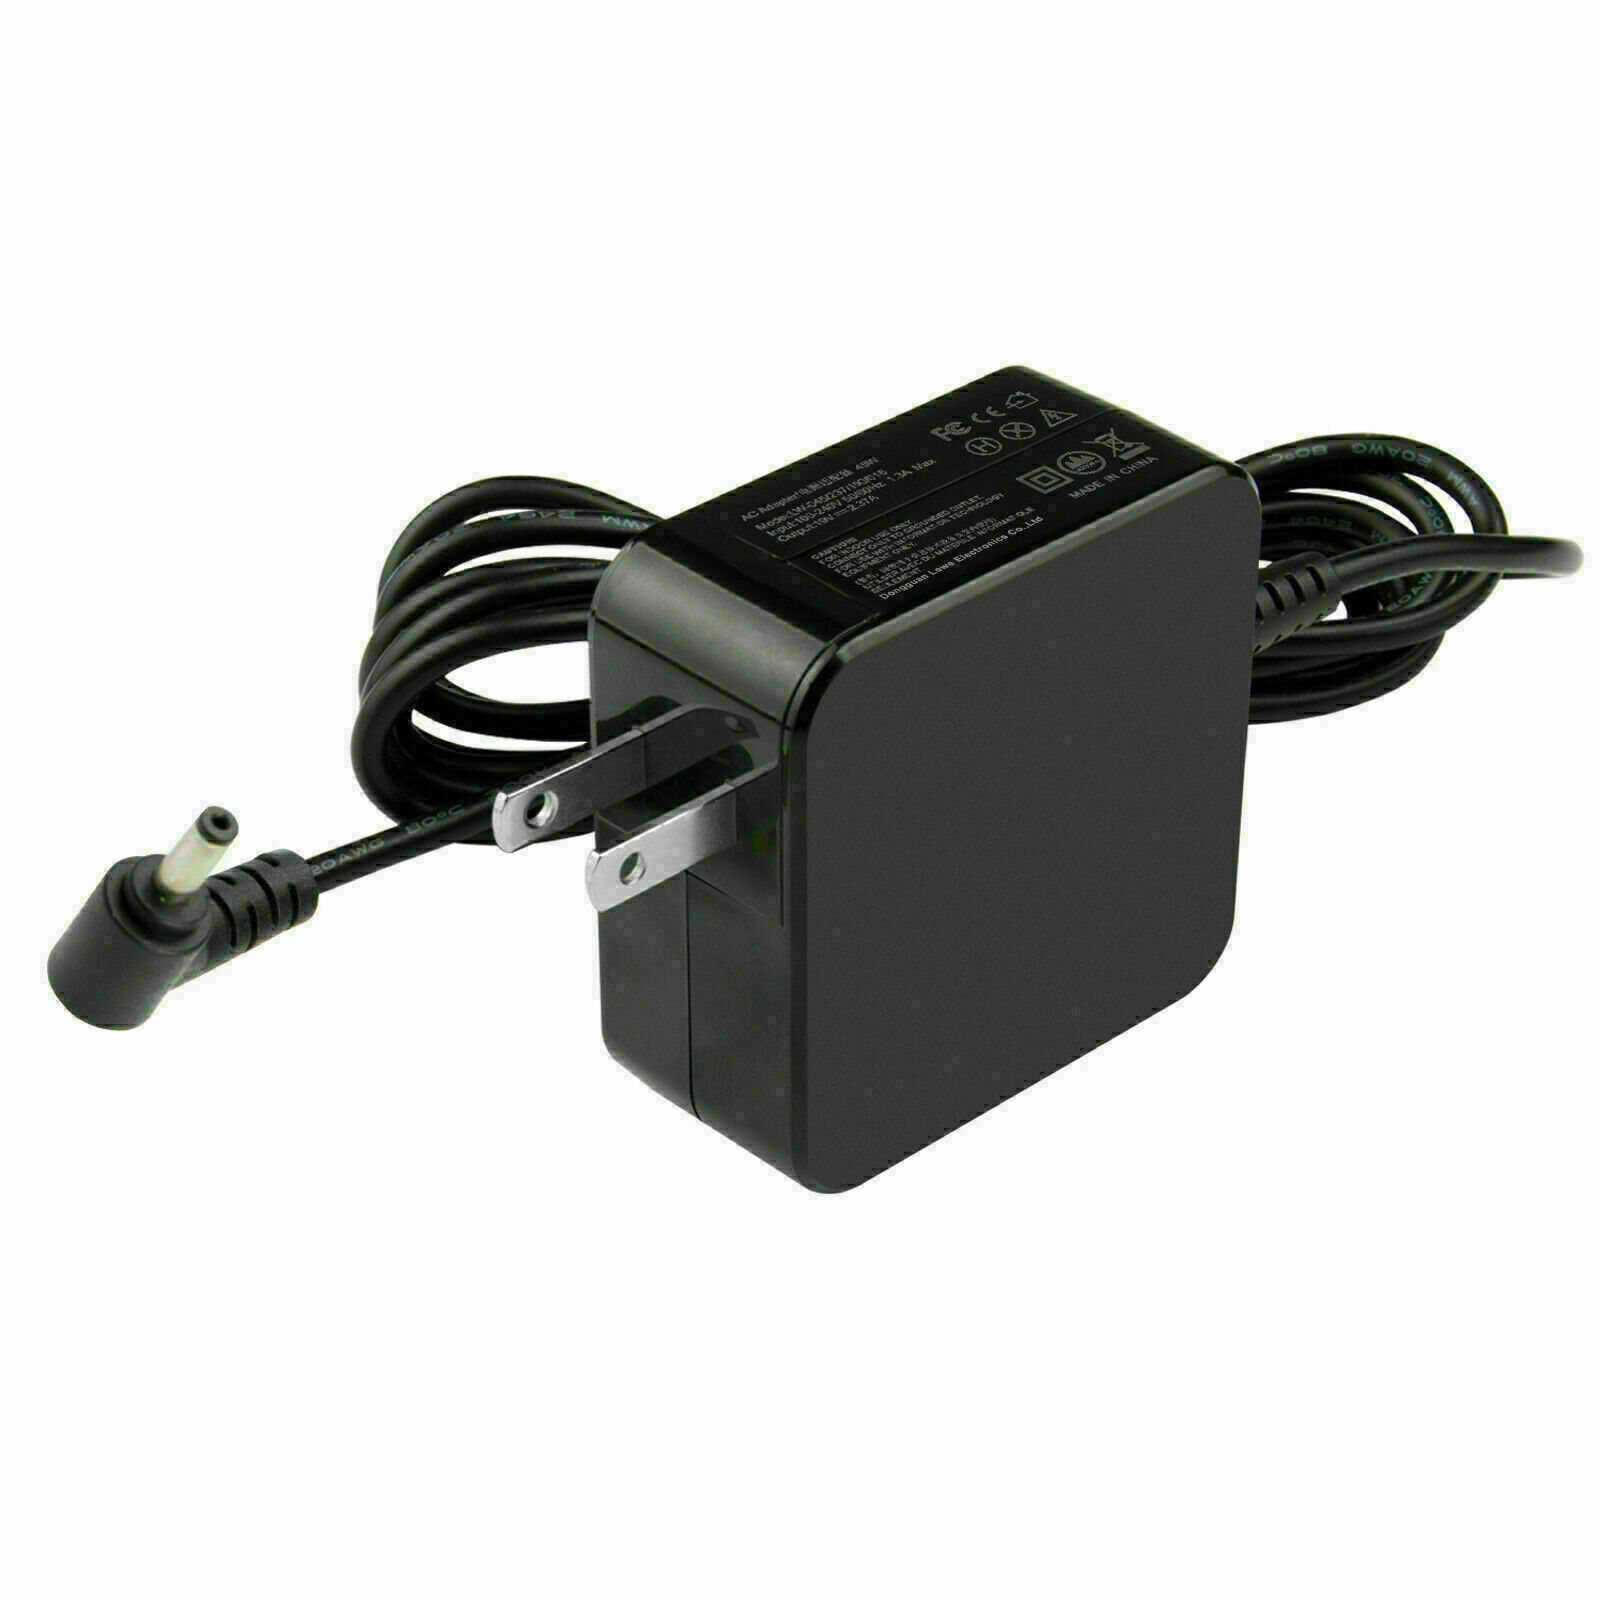 AC Adapter Power Charger For ASUS E410MA E410M E410 E210M E210E510 E406M E410M